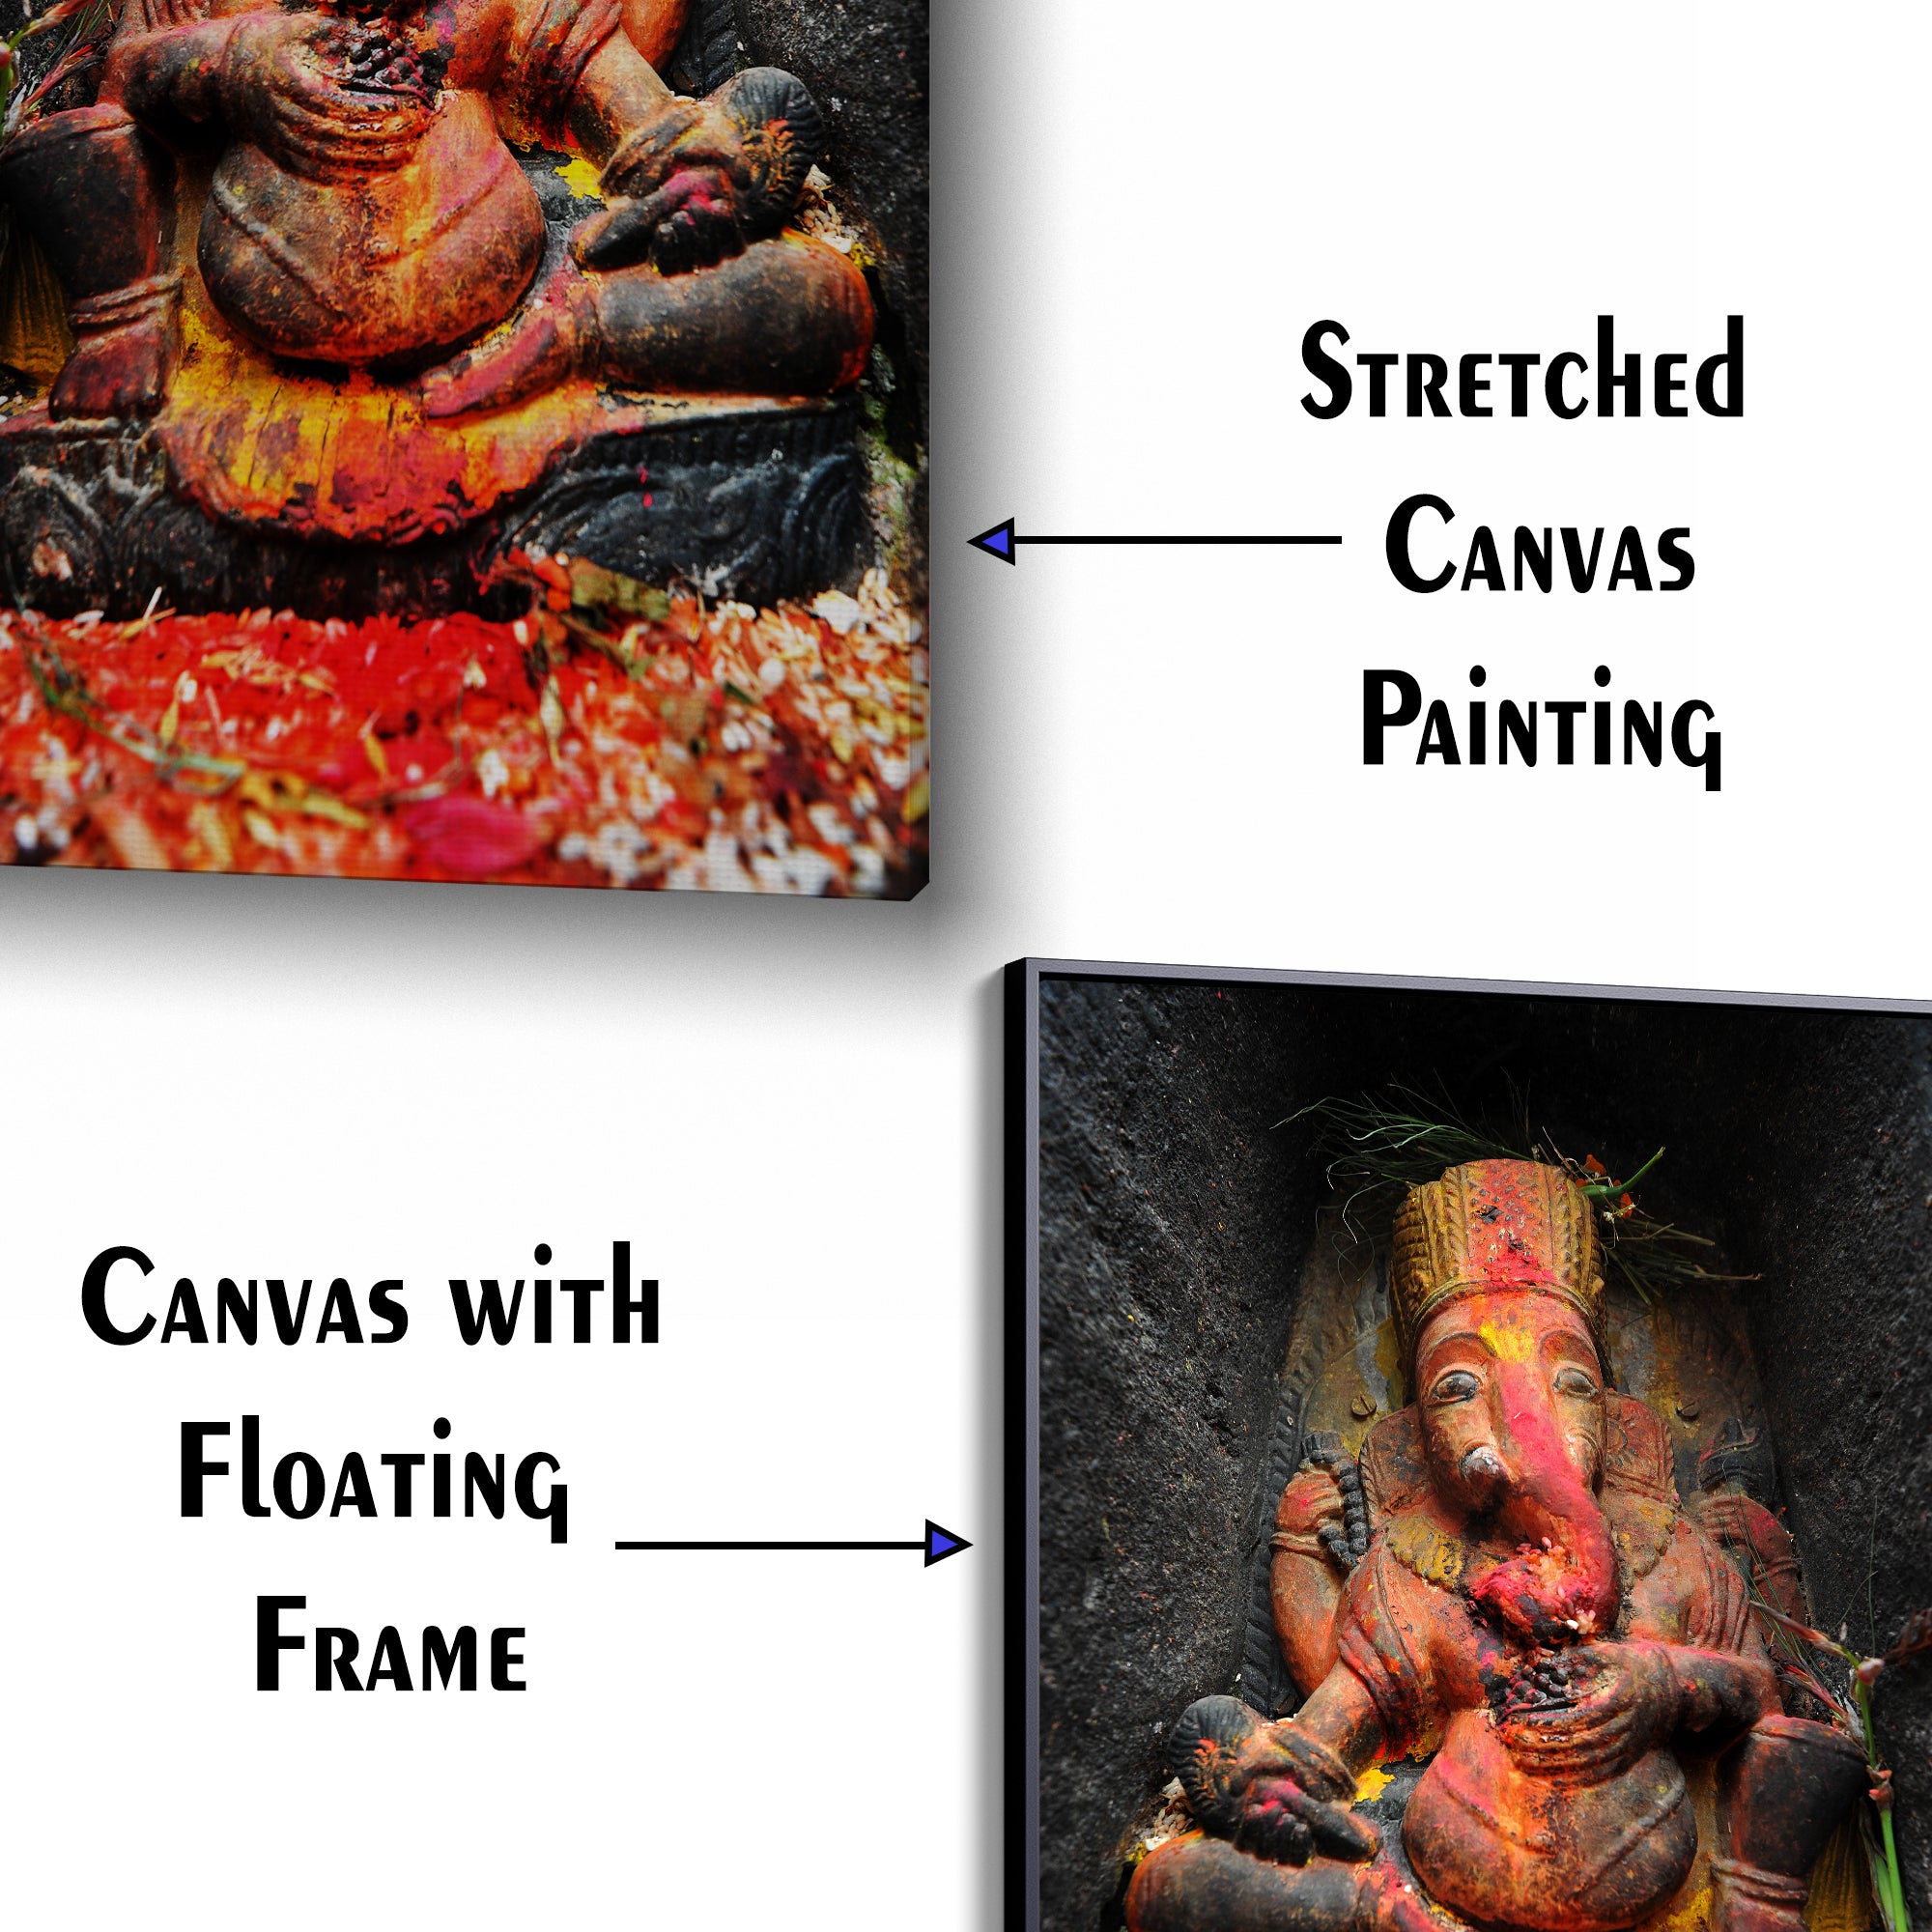 Lord Ganesha Statue Canvas Wall Painting